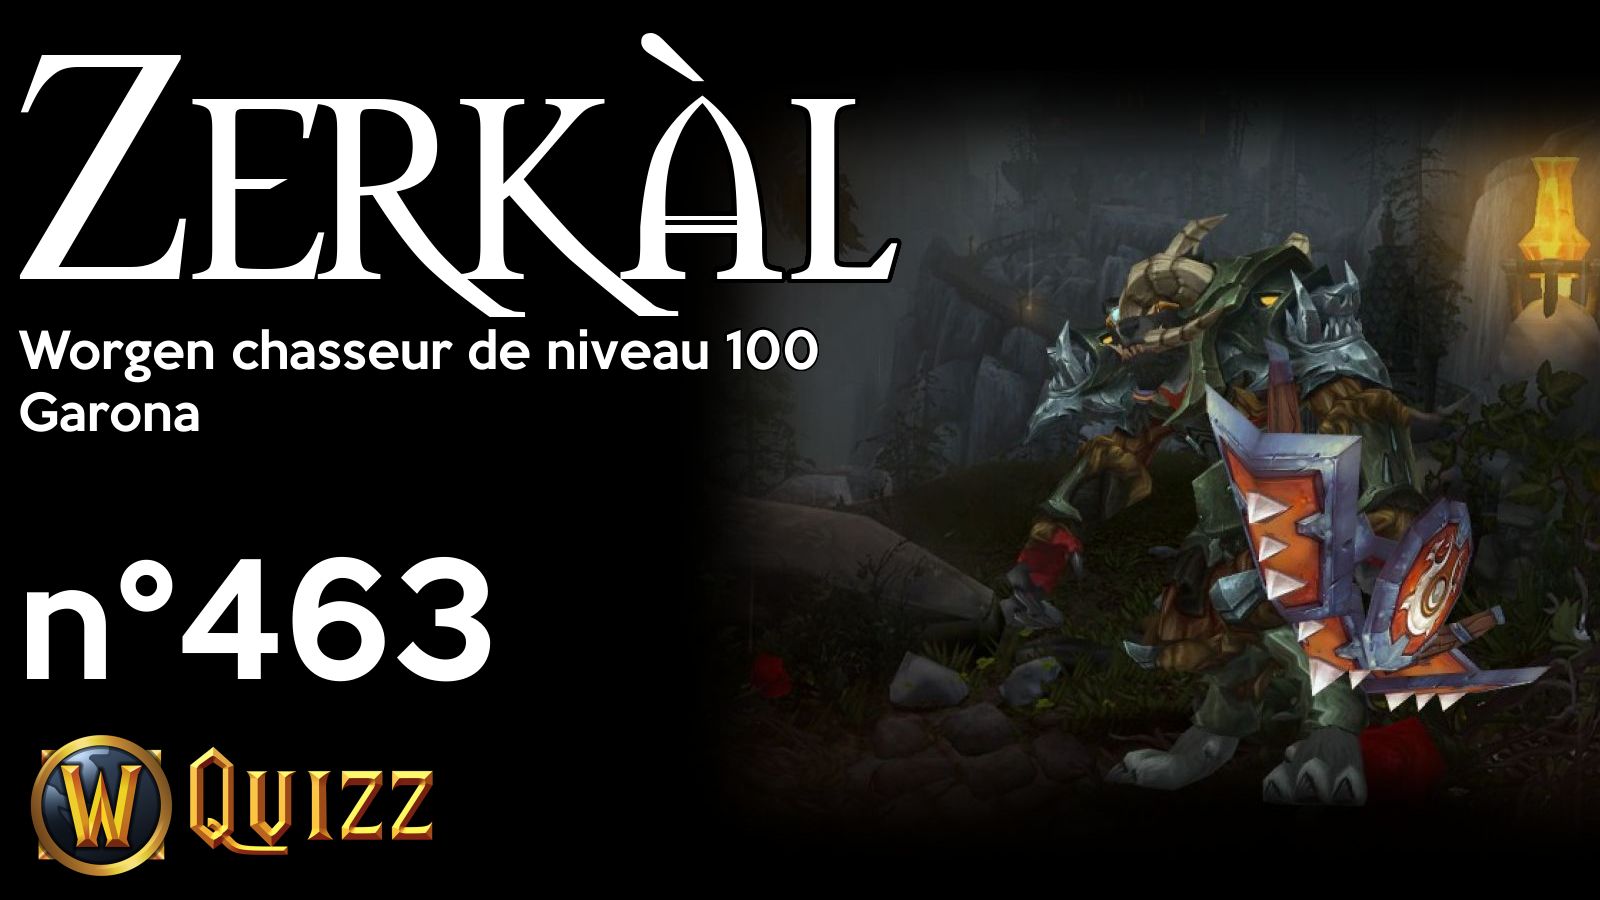 Zerkàl, Worgen chasseur de niveau 100, Garona